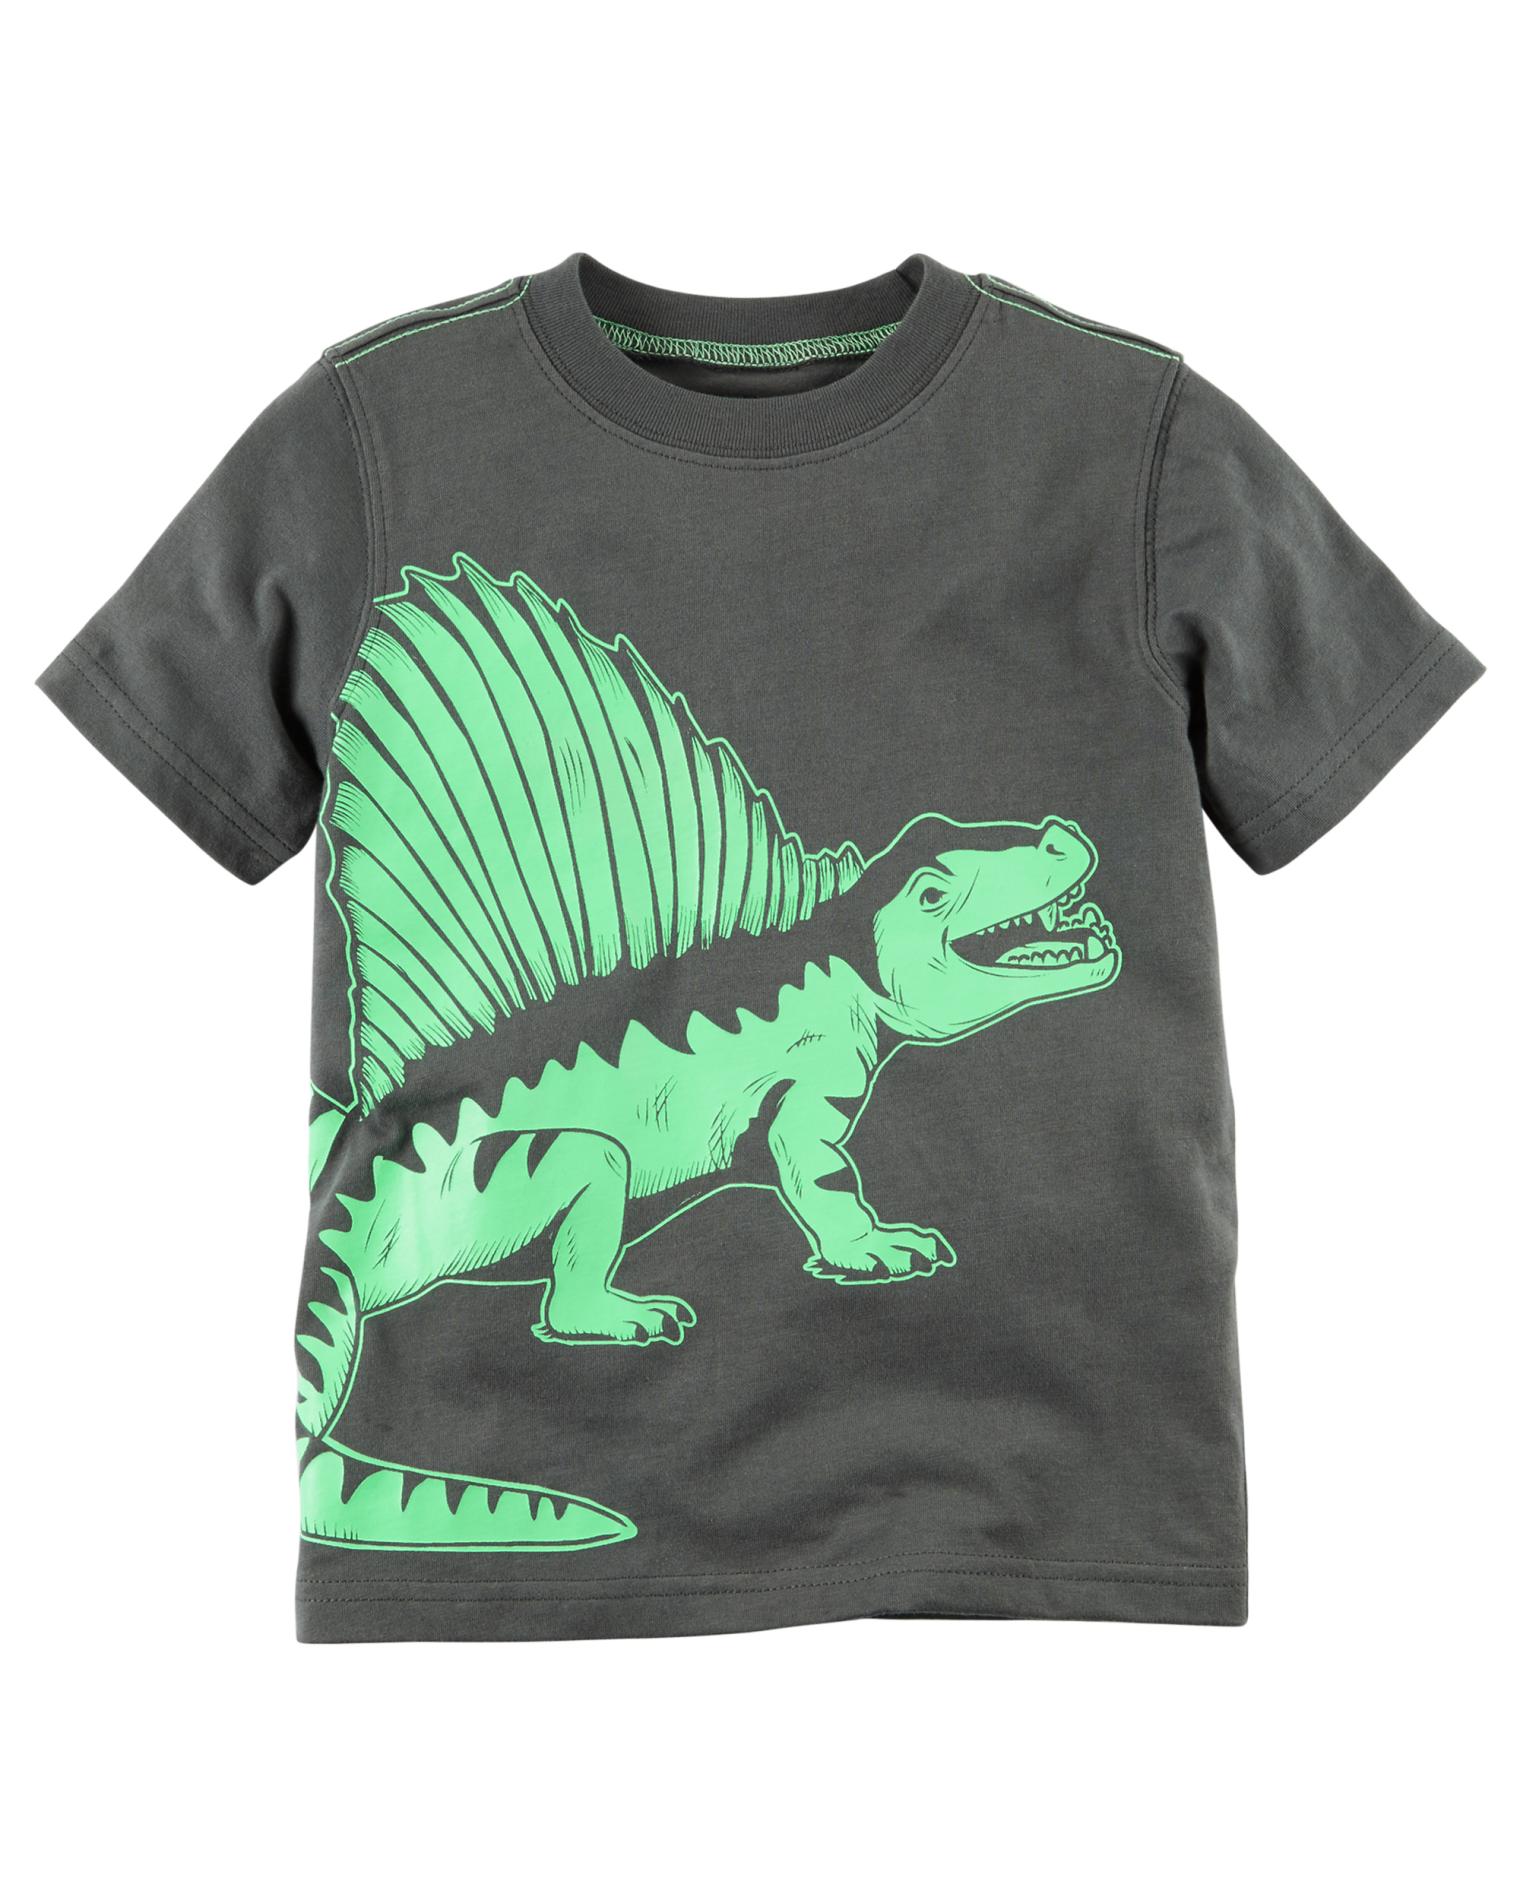 Carter's Toddler Boys' Graphic T-Shirt - Dinosaur